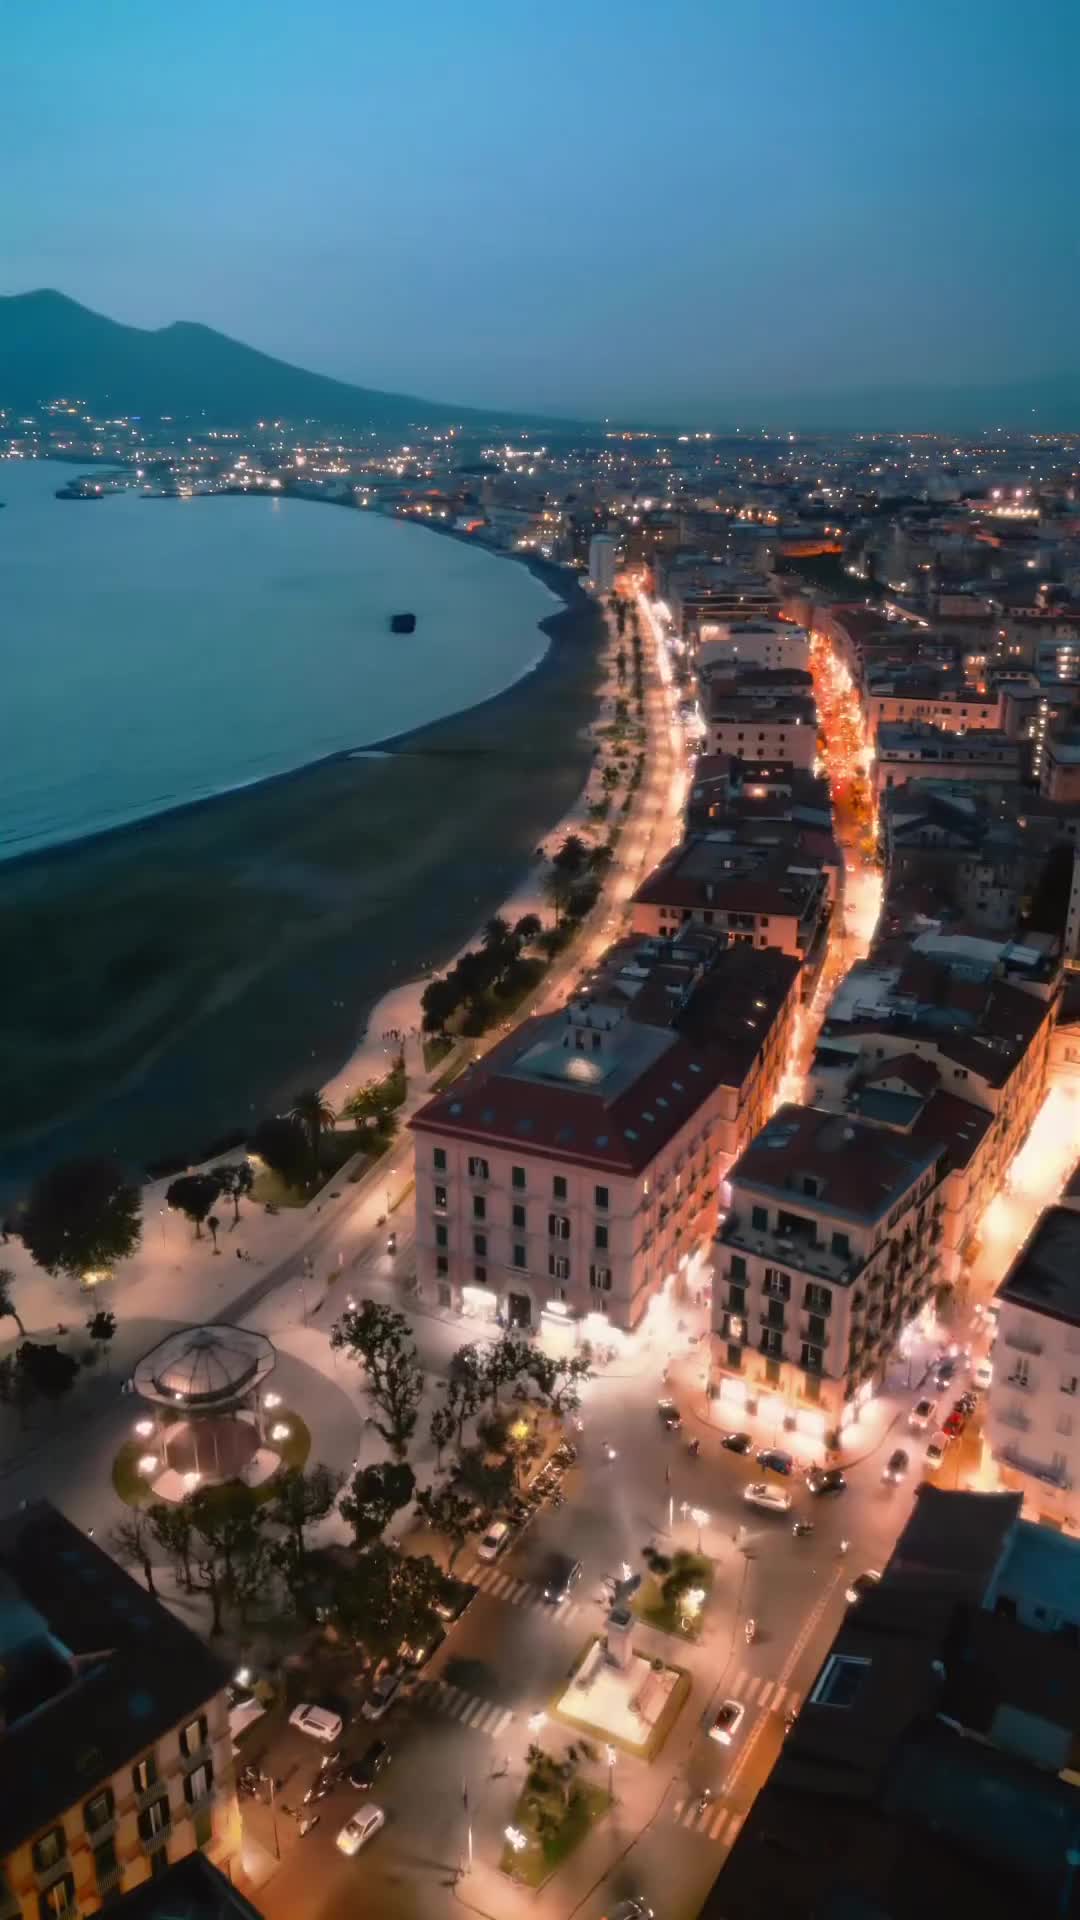 Stunning Seafront of Castellammare: Aerial Beauty Captured